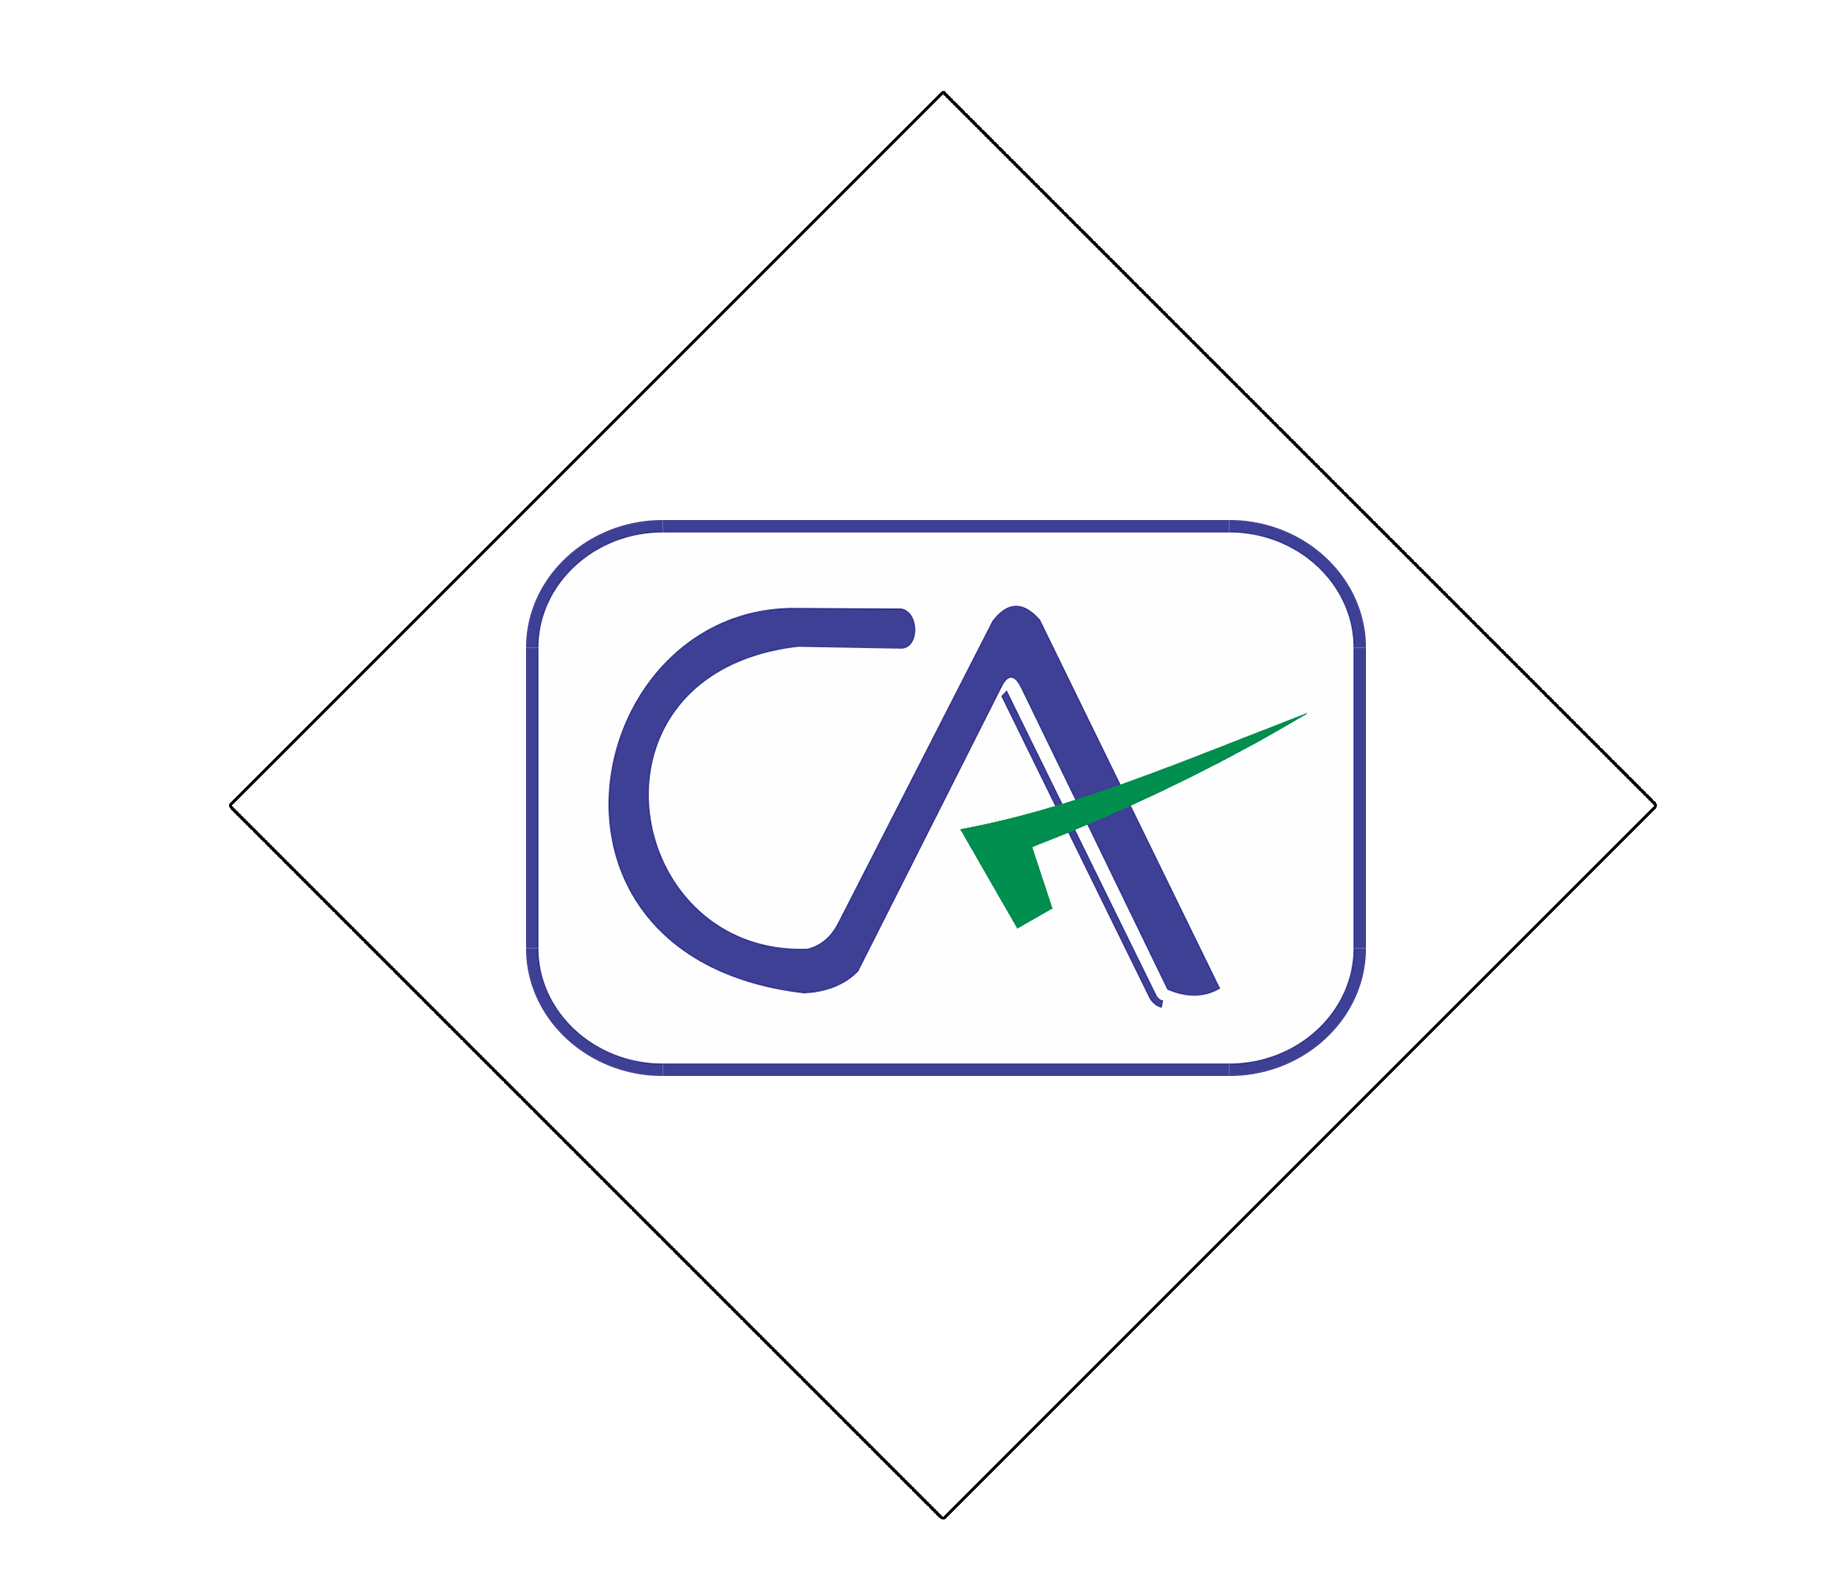 Ca logo design isolated on white background Vector Image